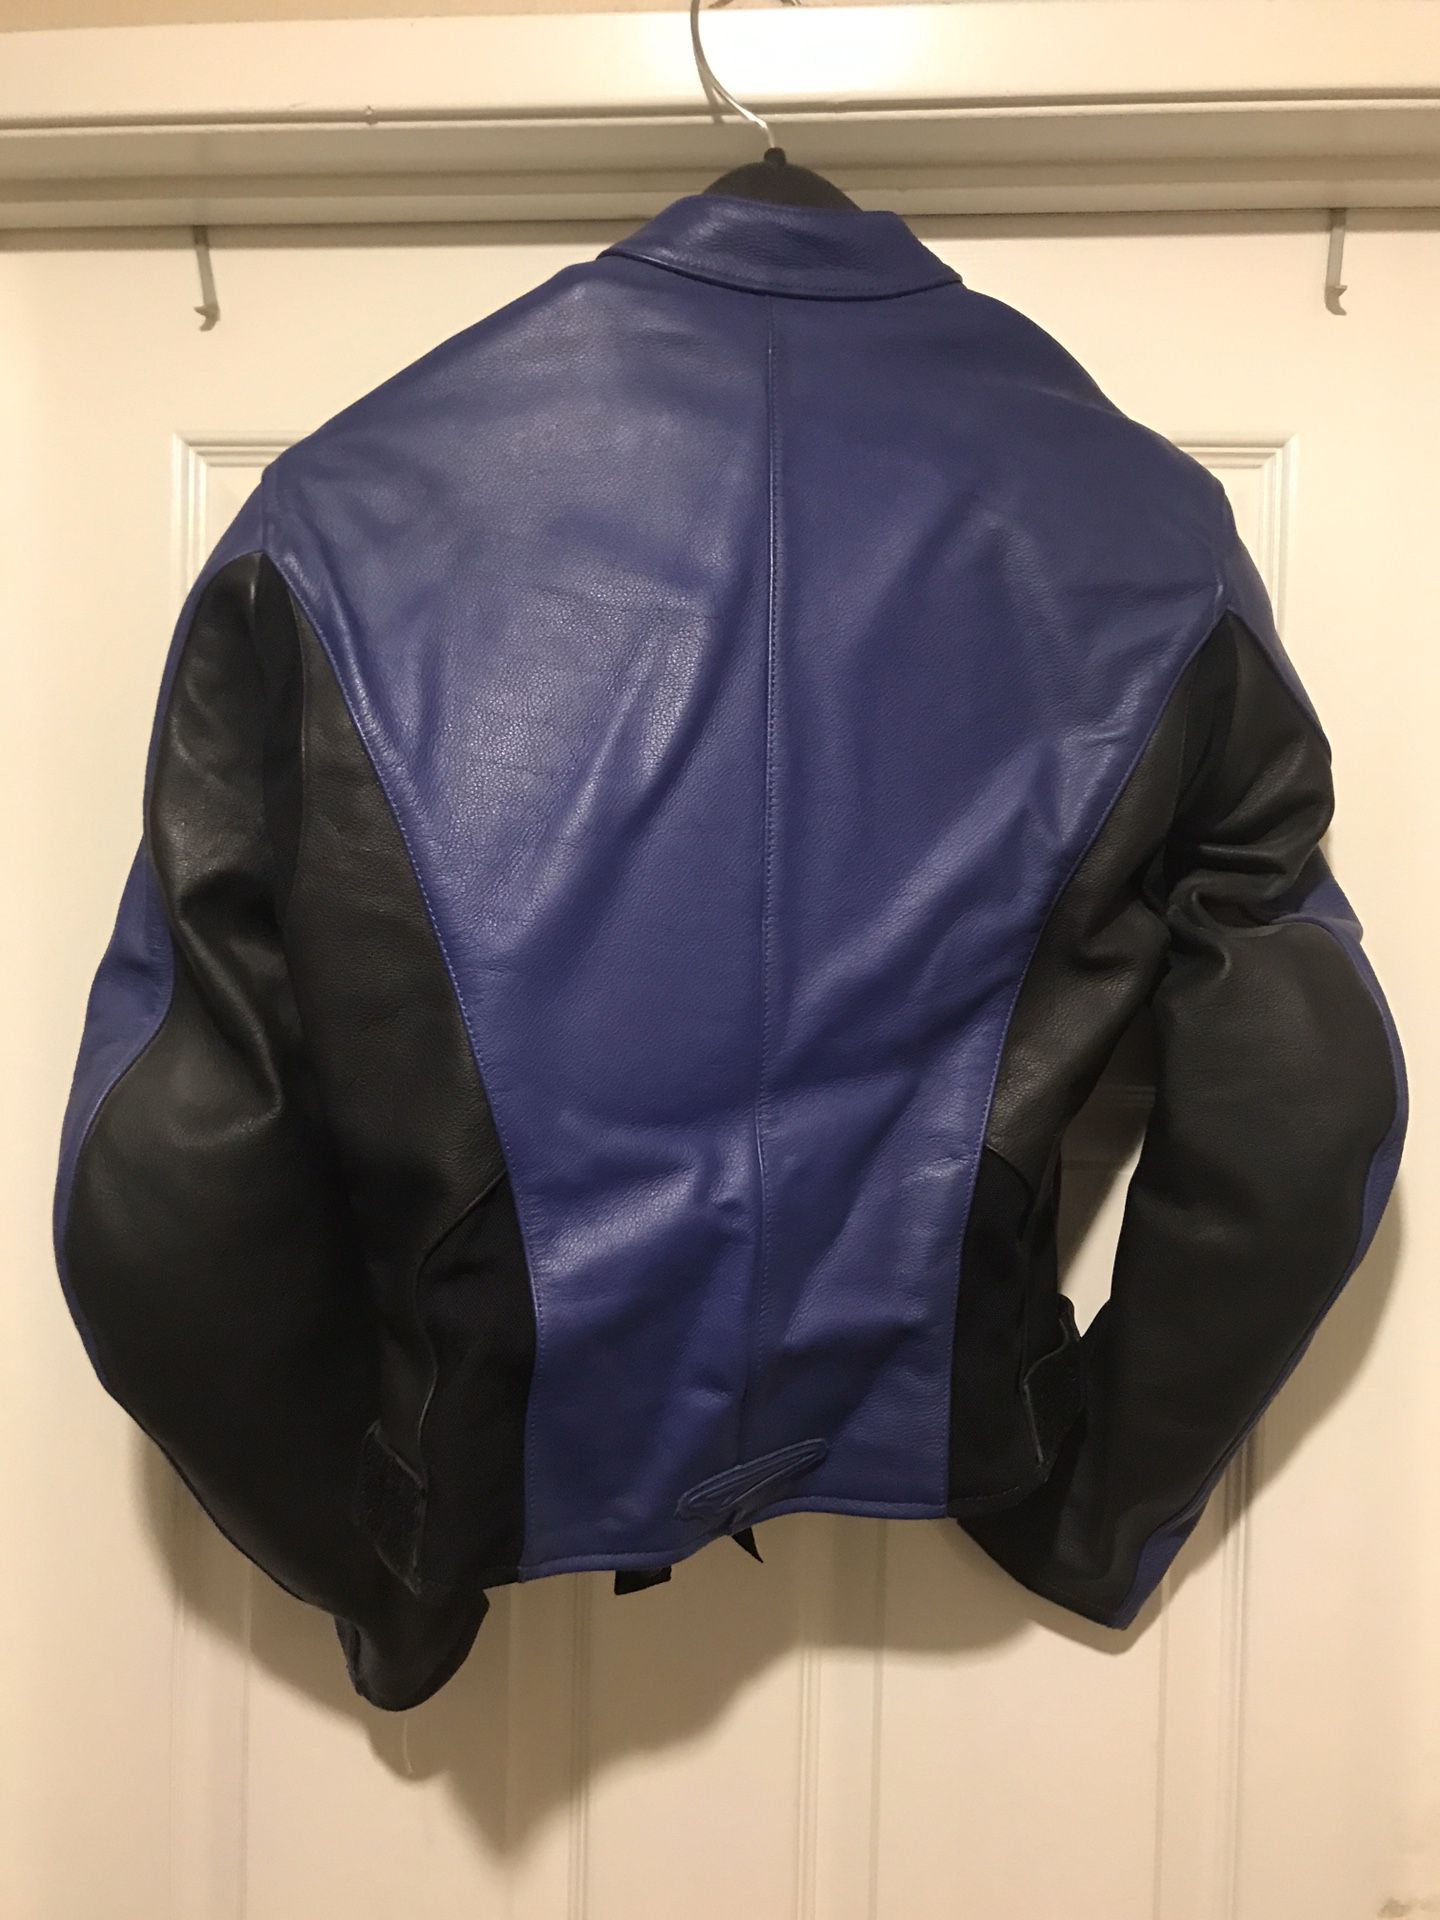 Teknic leather motorcycle jacket - sz 6 or 34 small